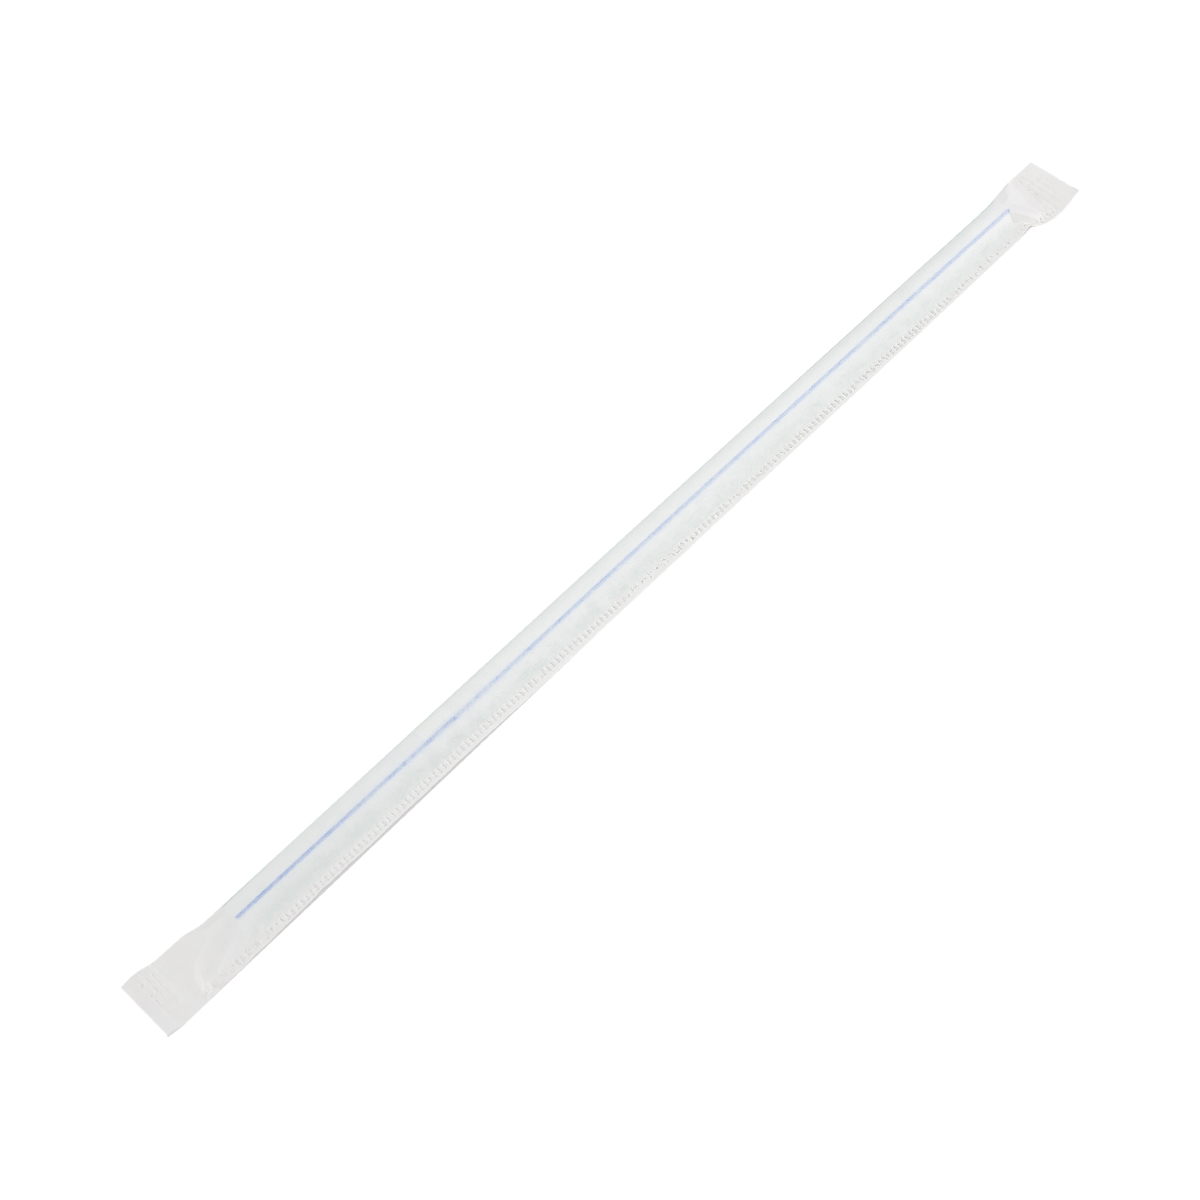 Plastic Straw, White Colour, 